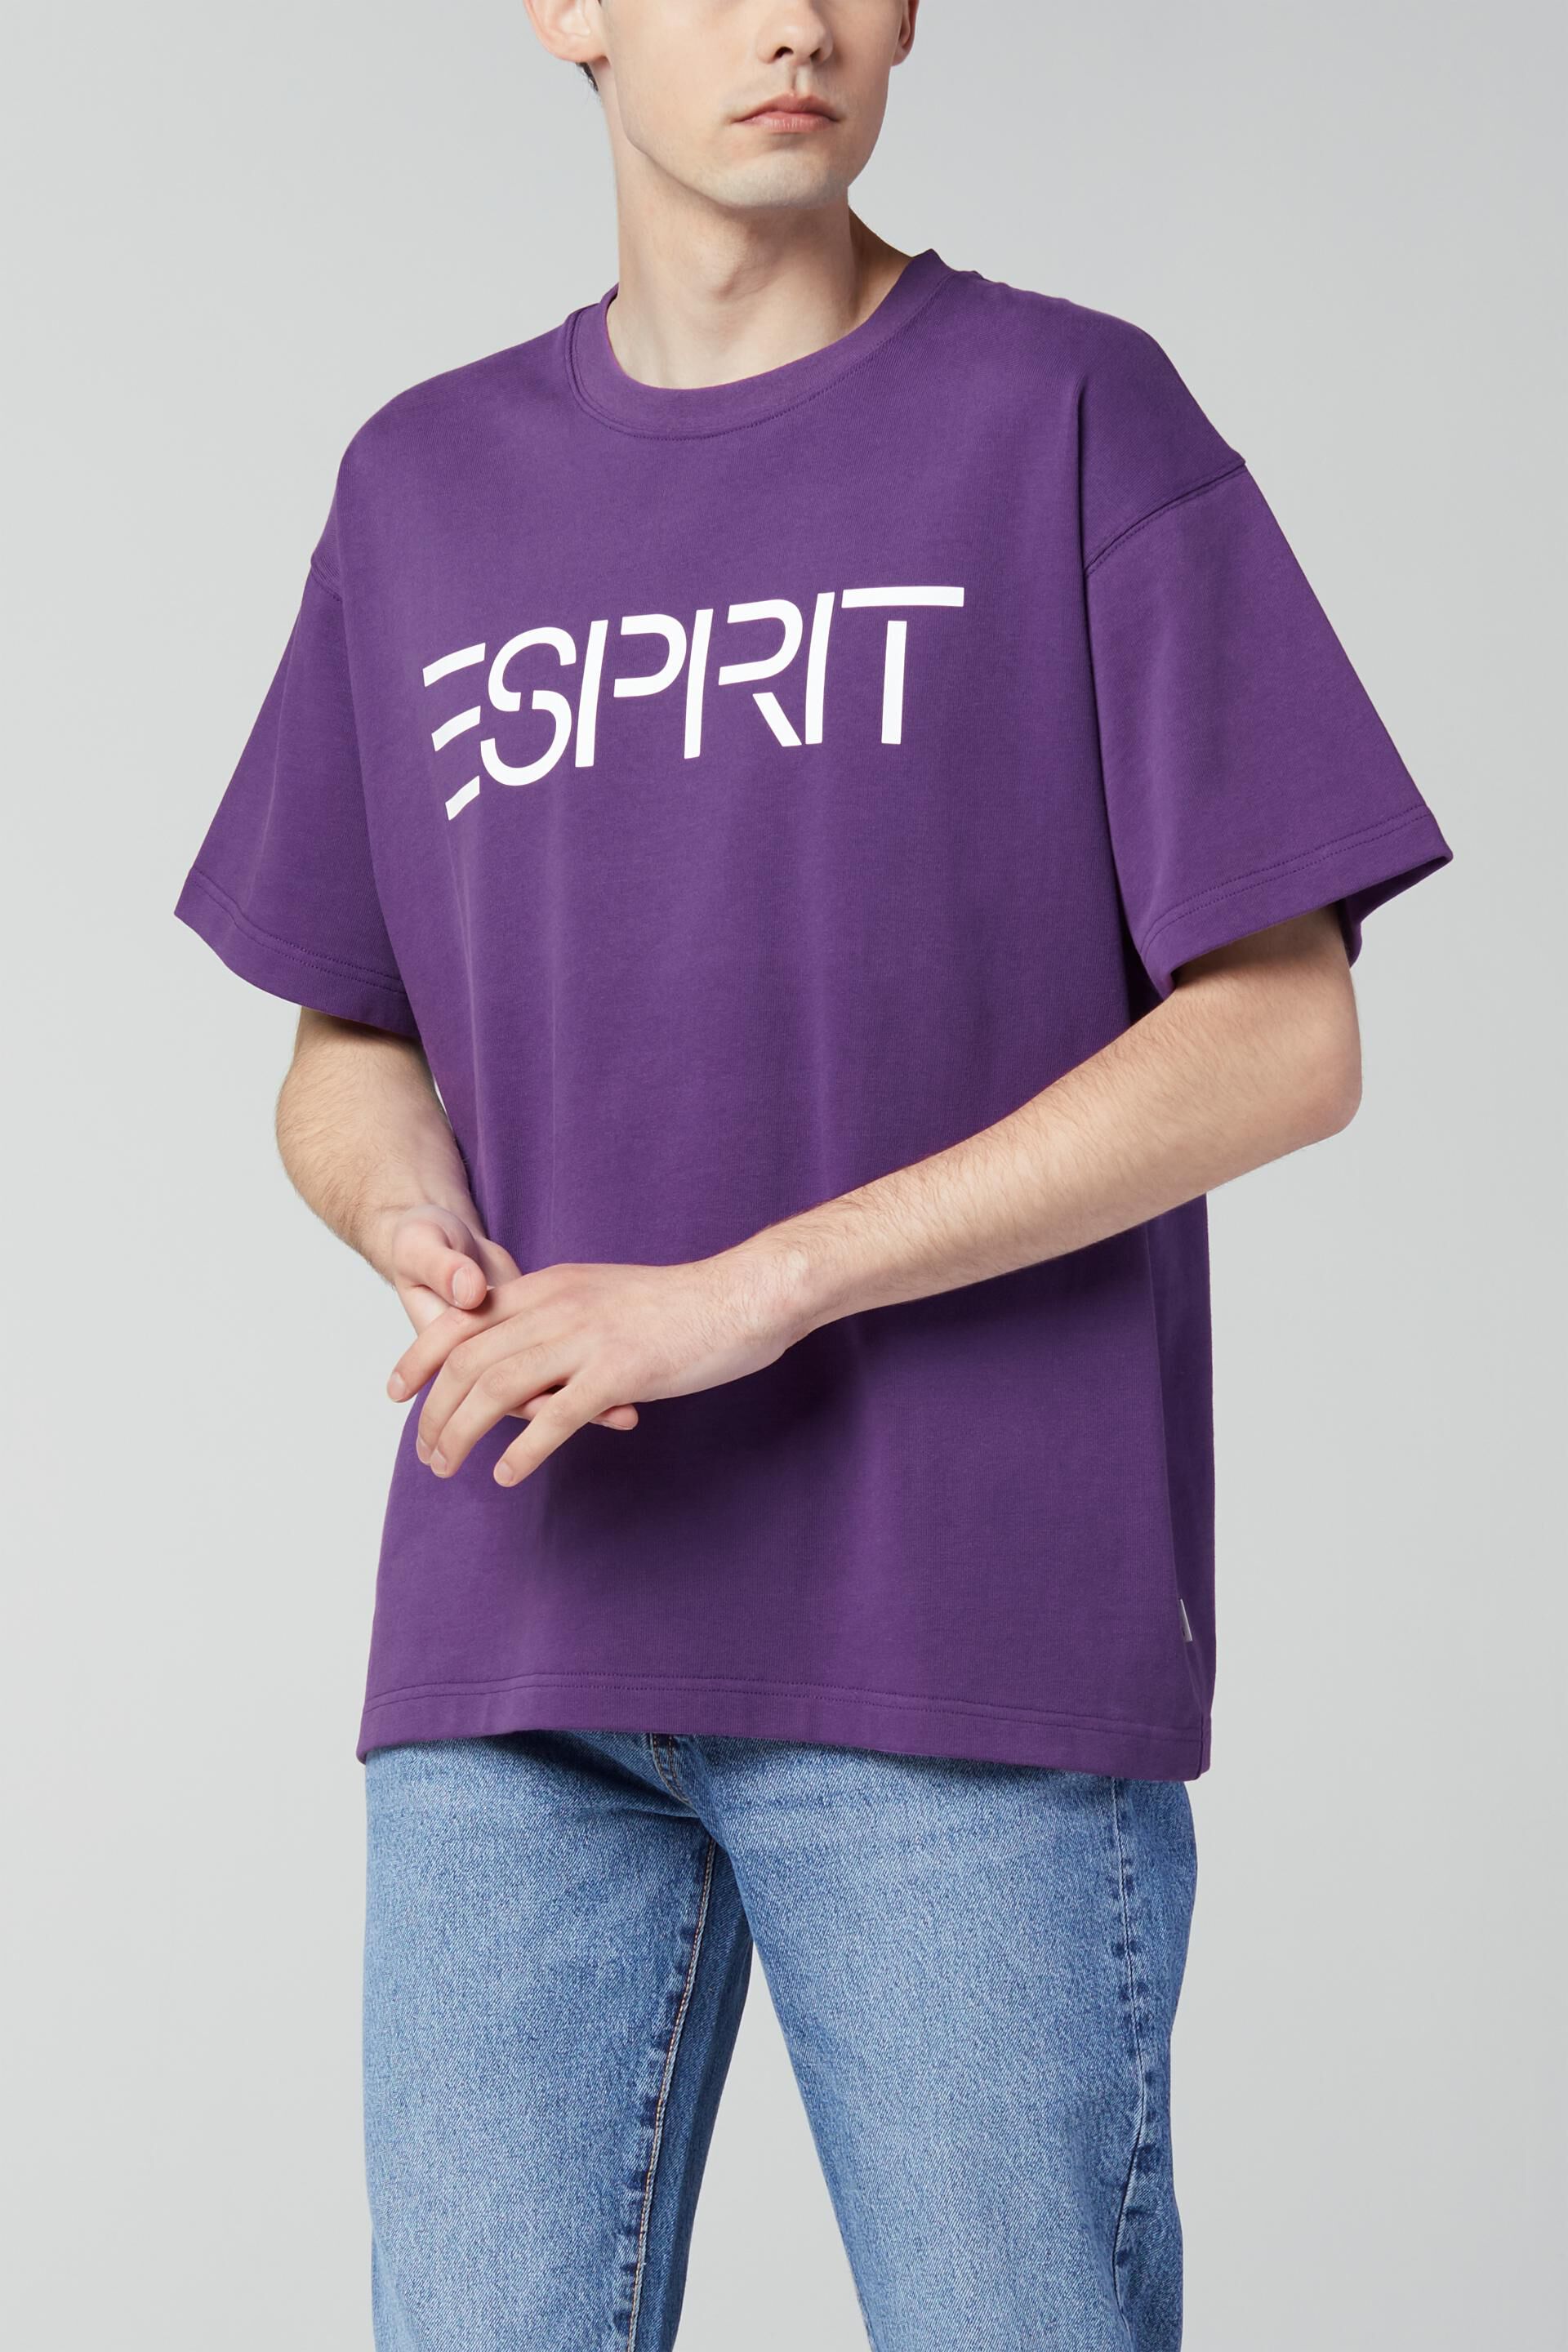 Esprit print with a T-shirt Unisex logo